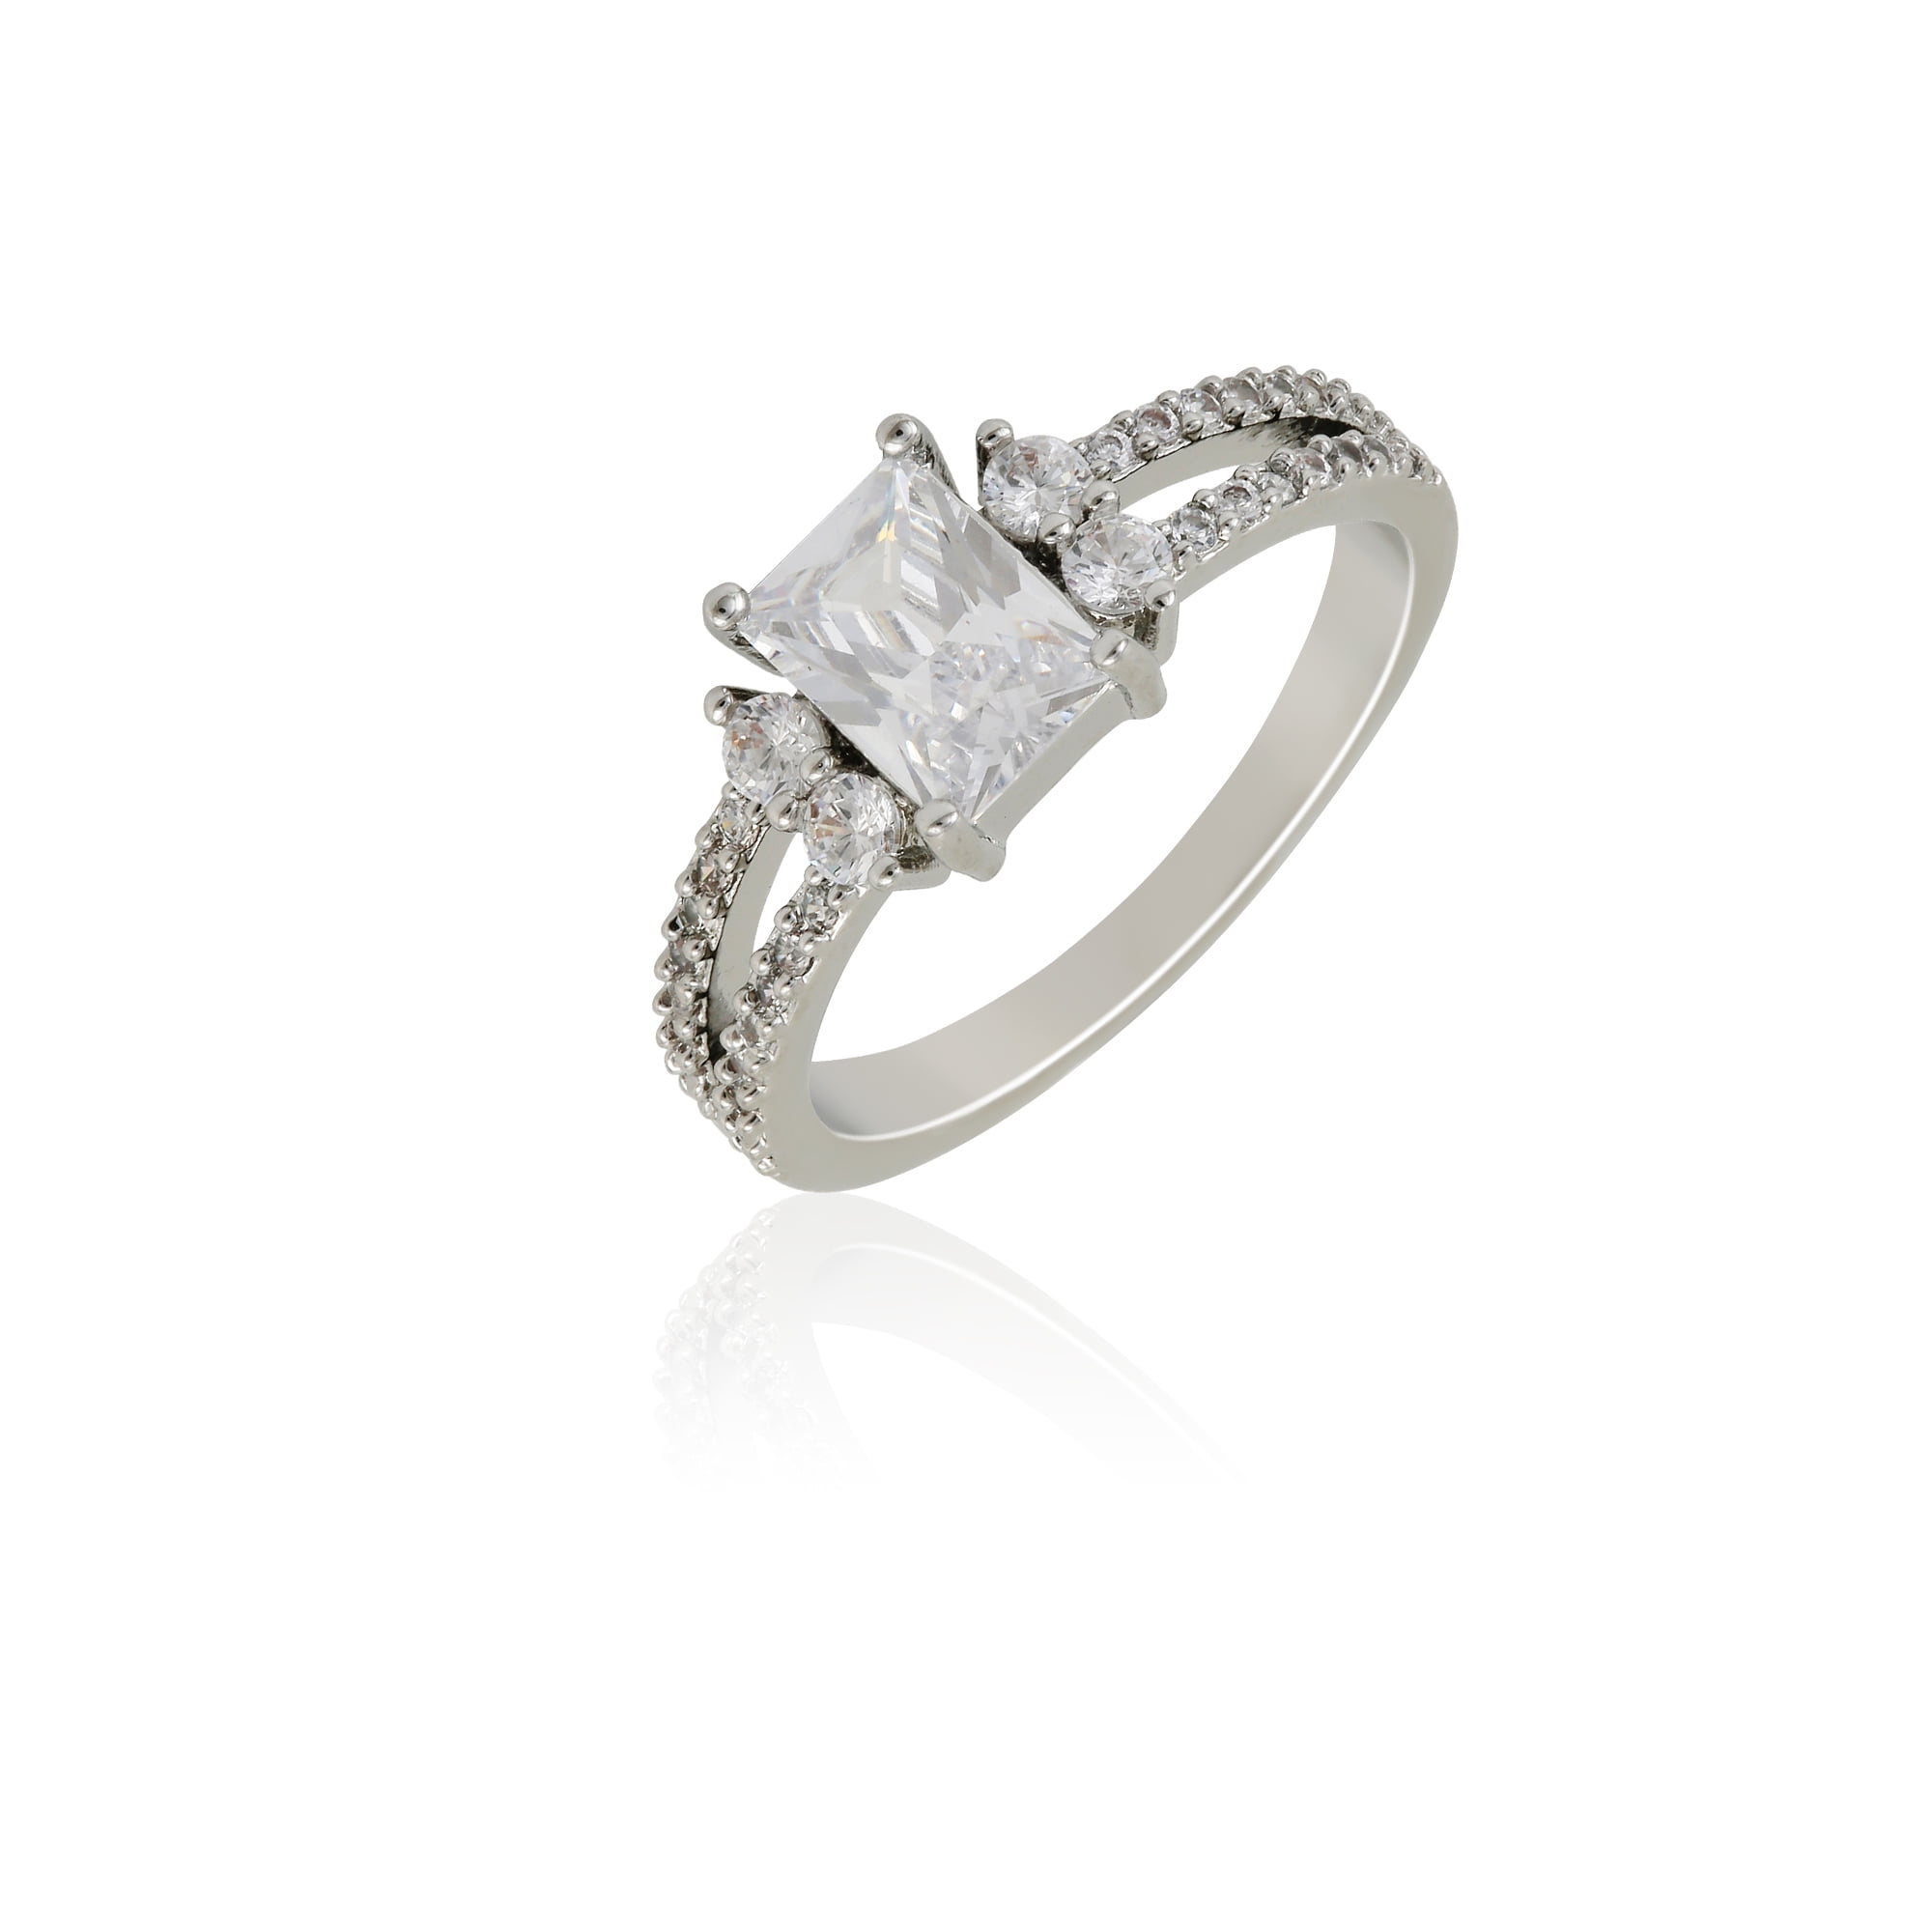 NOBRAND Cz Emerald Cut Cz Engagement Ring Size 7